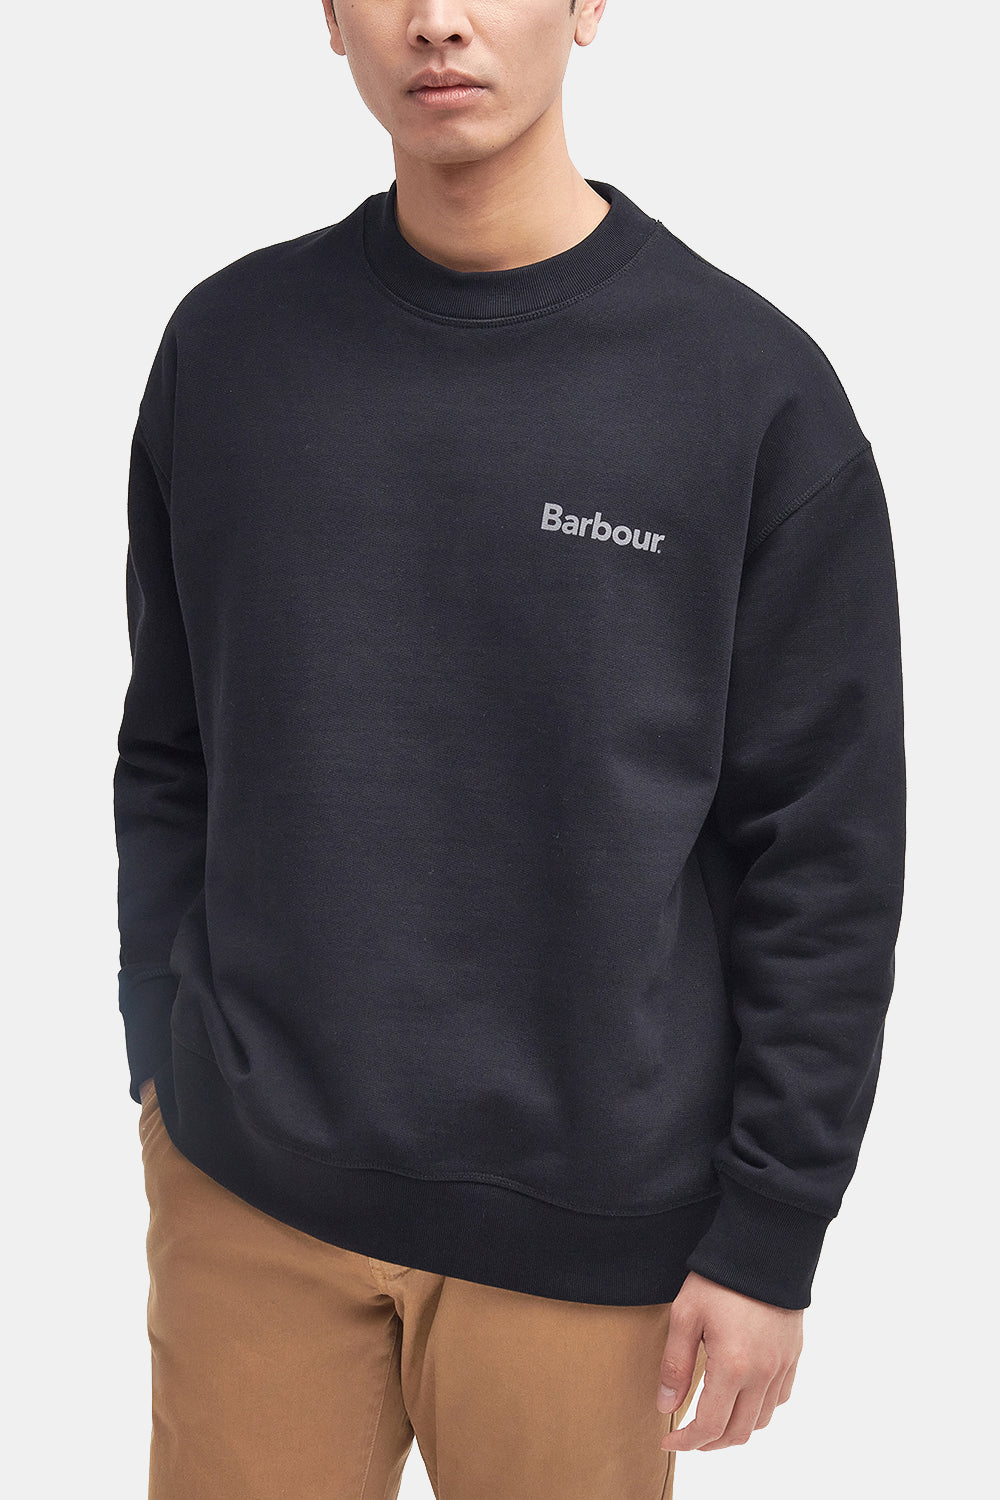 Barbour Nicholas Crew Sweatshirt (Black) Front